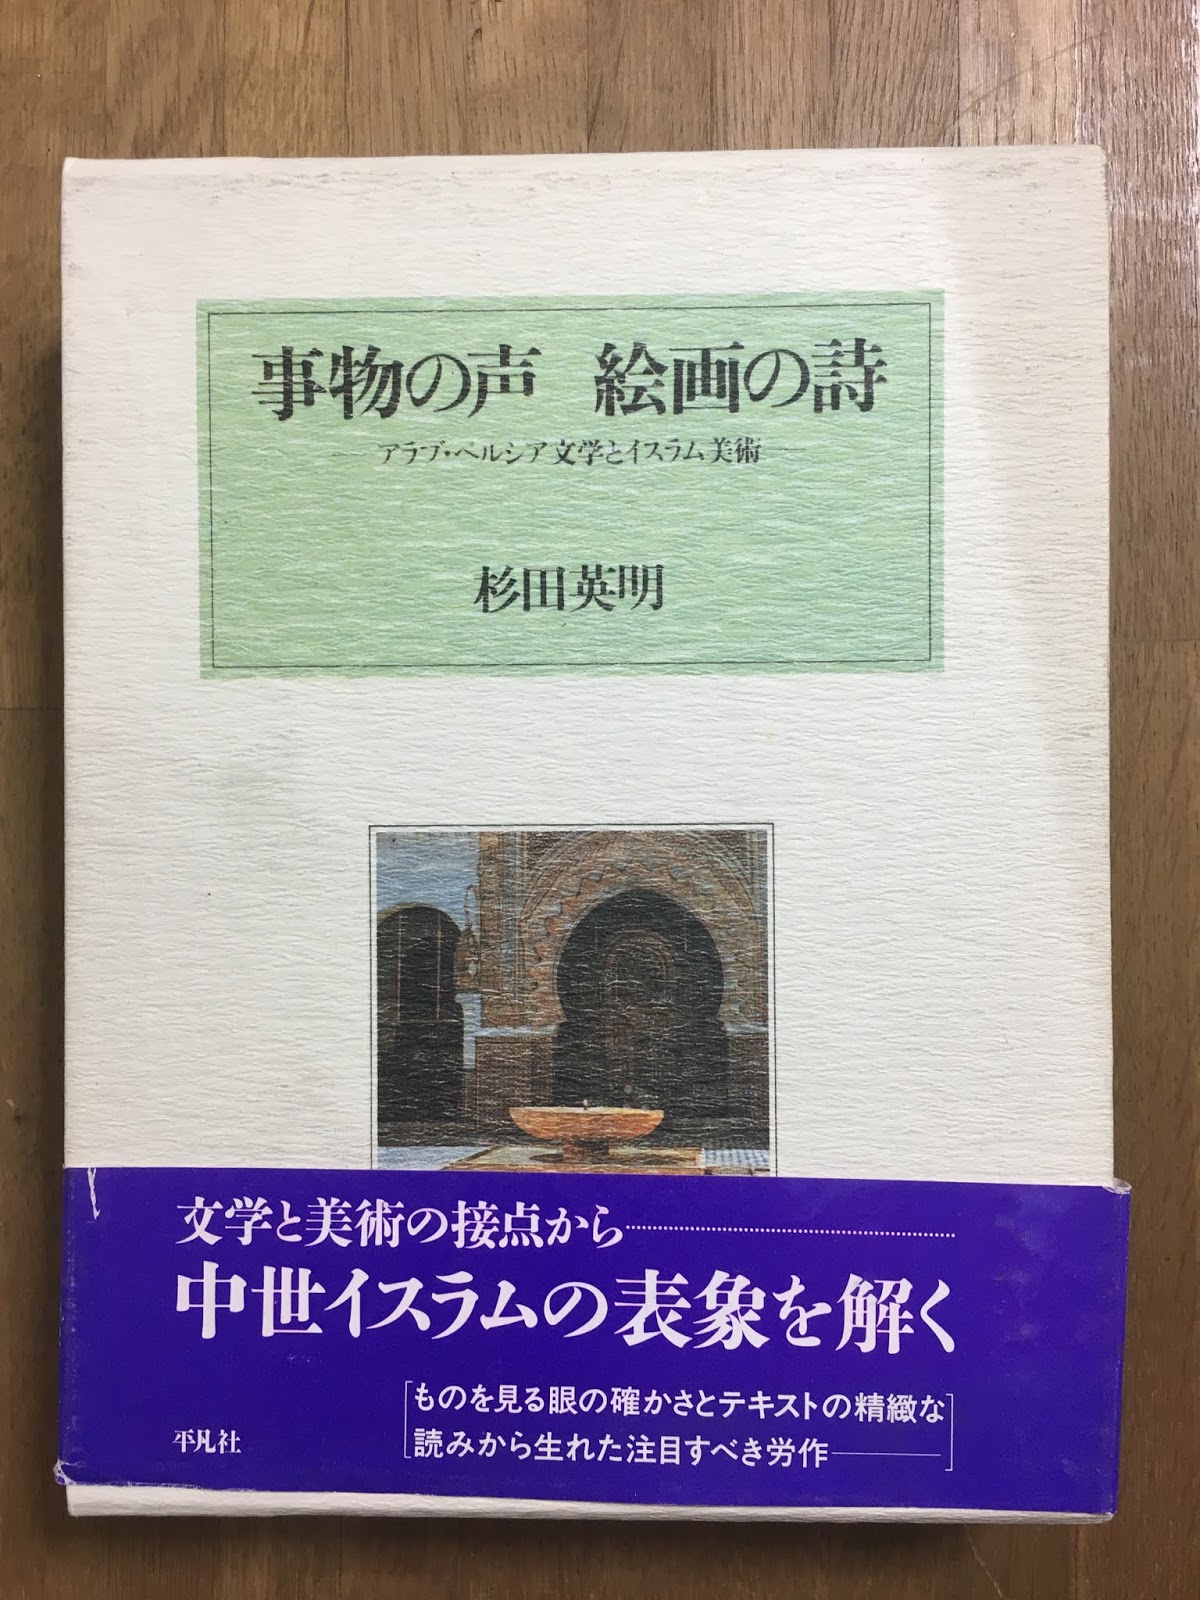 mikazuki books online 三日月書店: ハディースほか